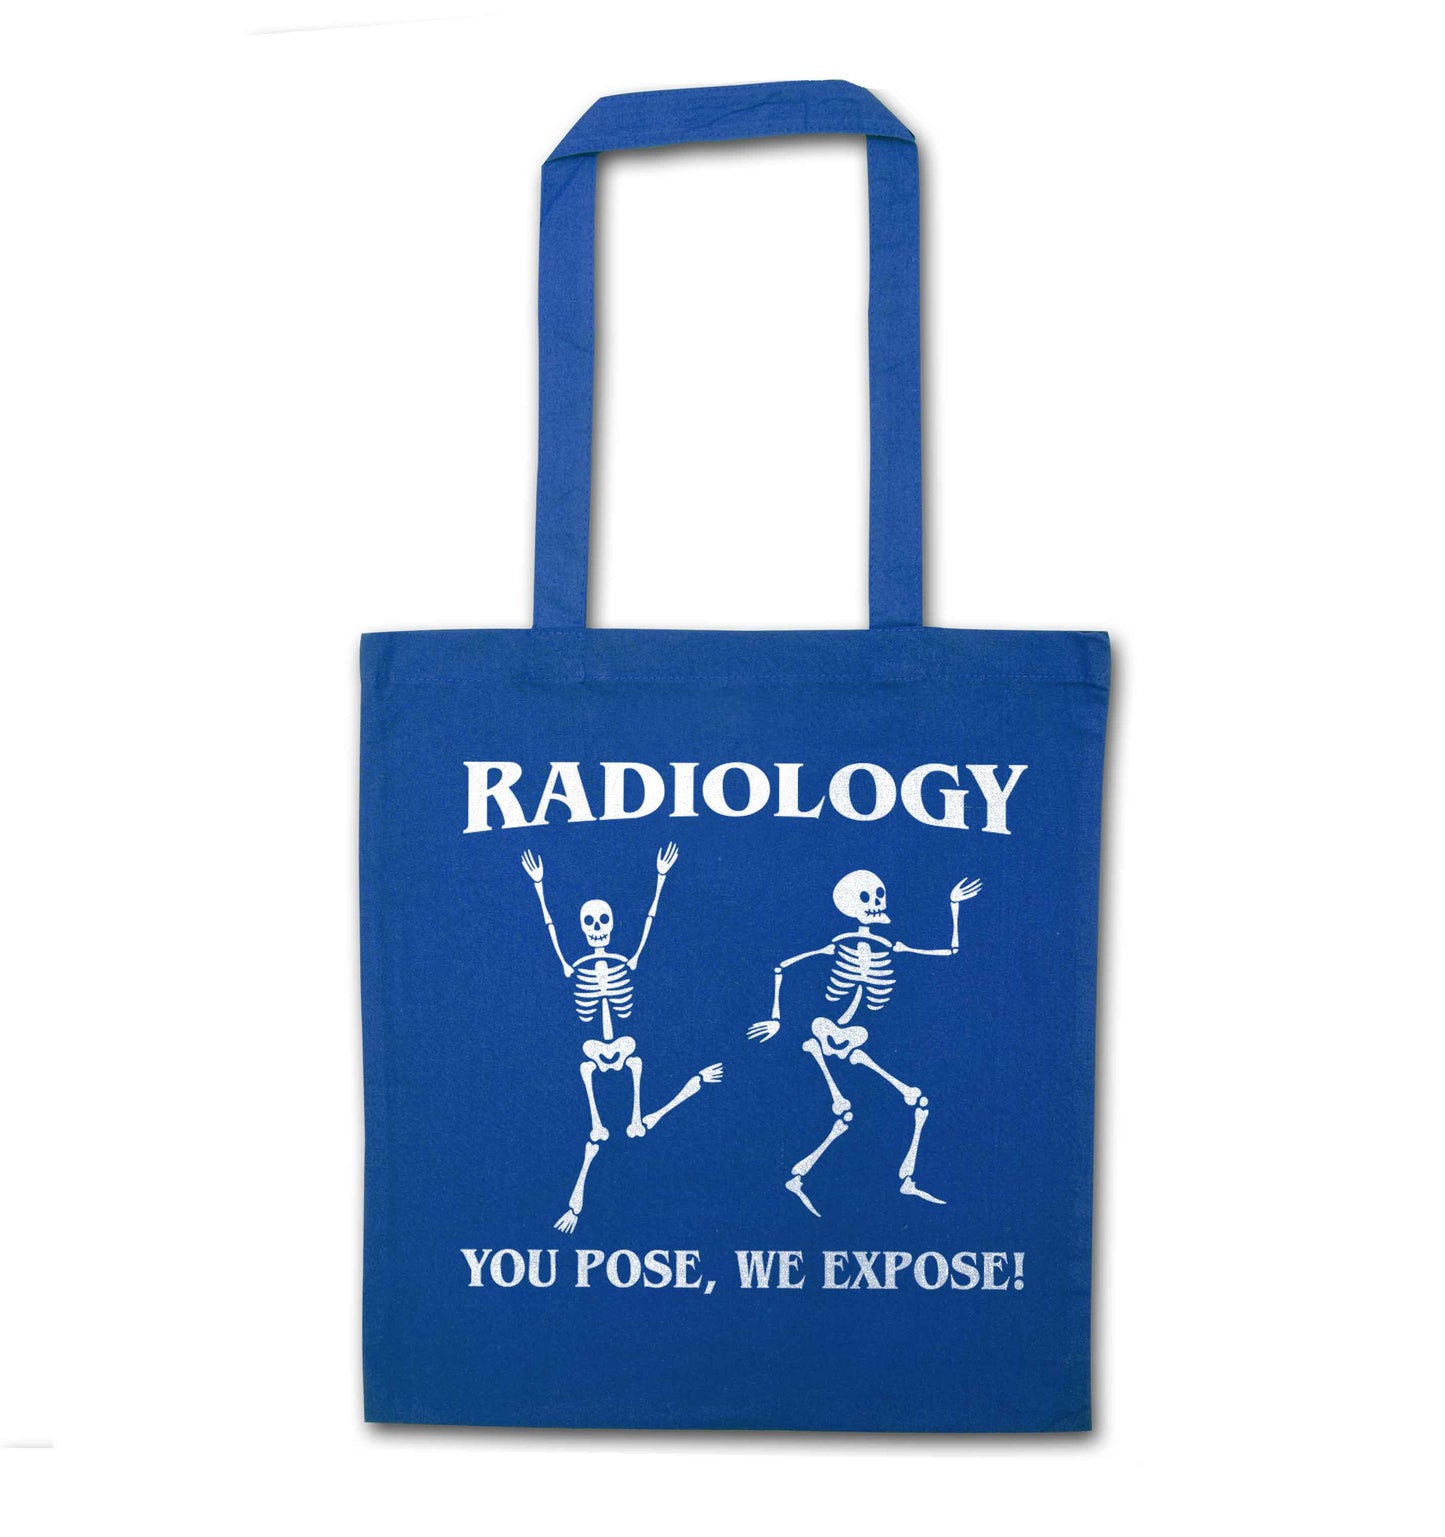 Radiology you pose we expose blue tote bag